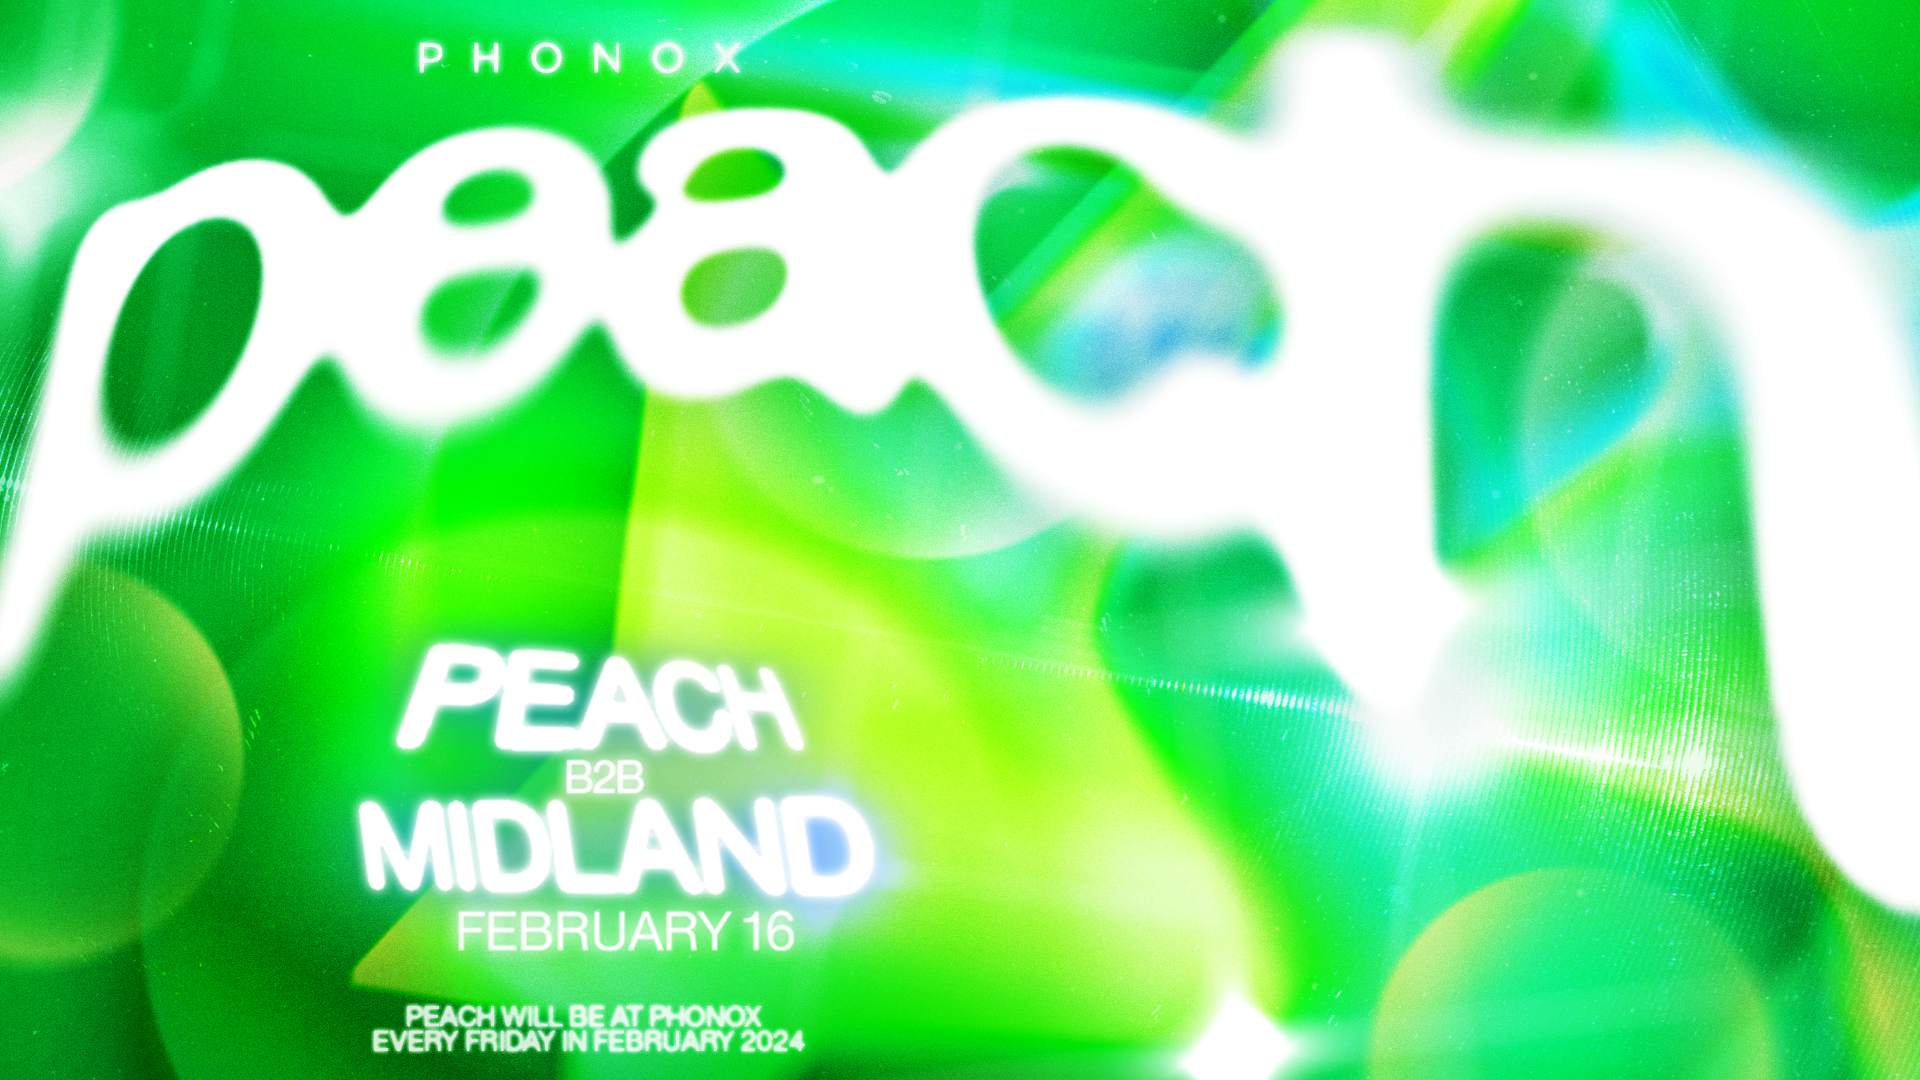 Peach b2b Midland (6 Hours) - フライヤー表